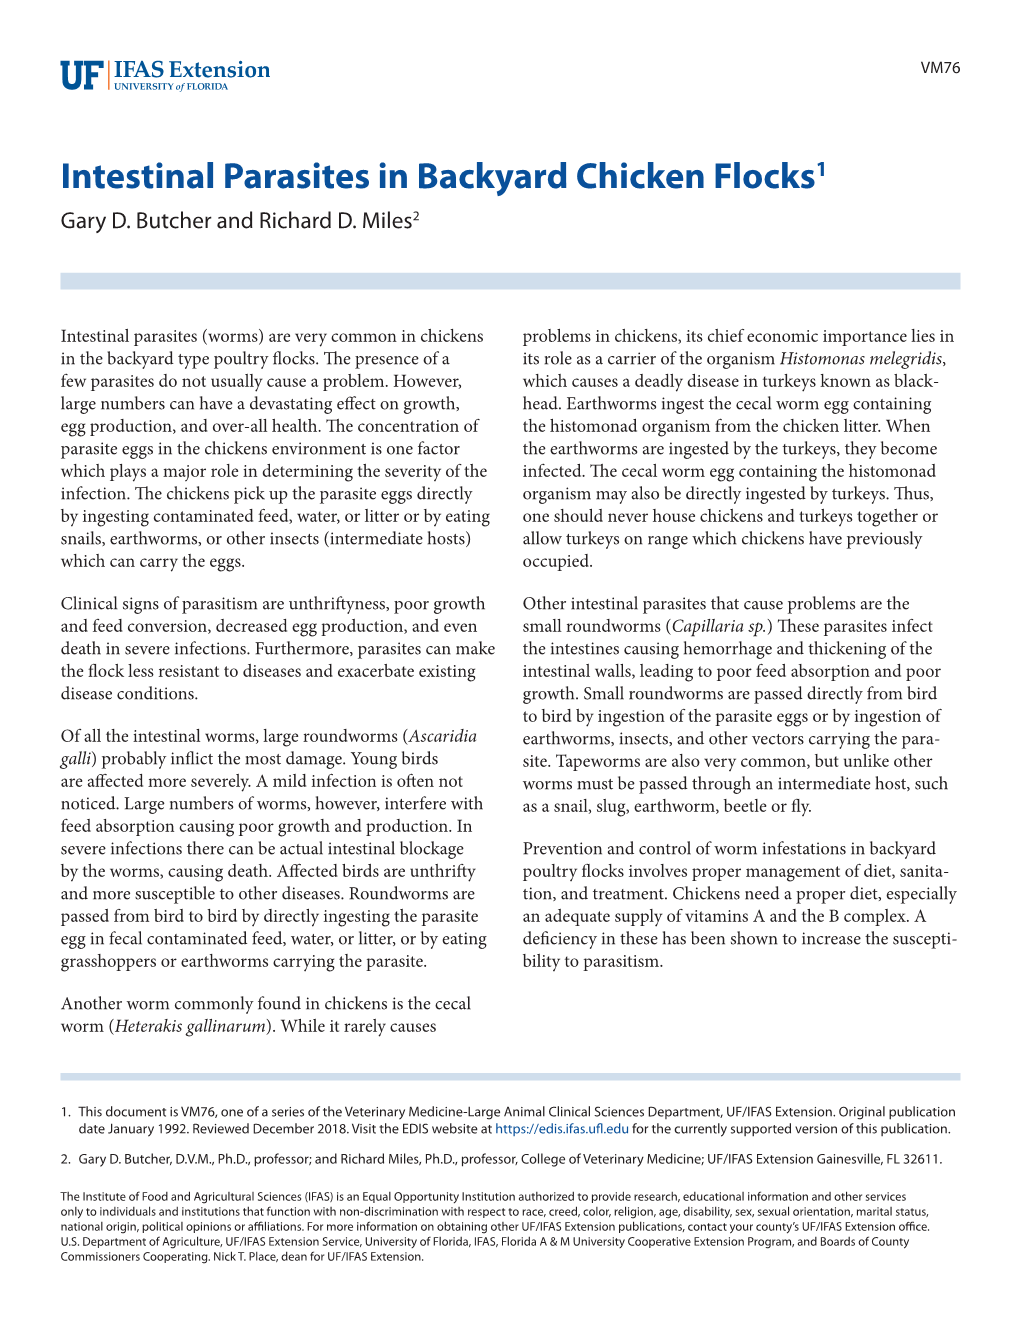 Intestinal Parasites in Backyard Chicken Flocks1 Gary D